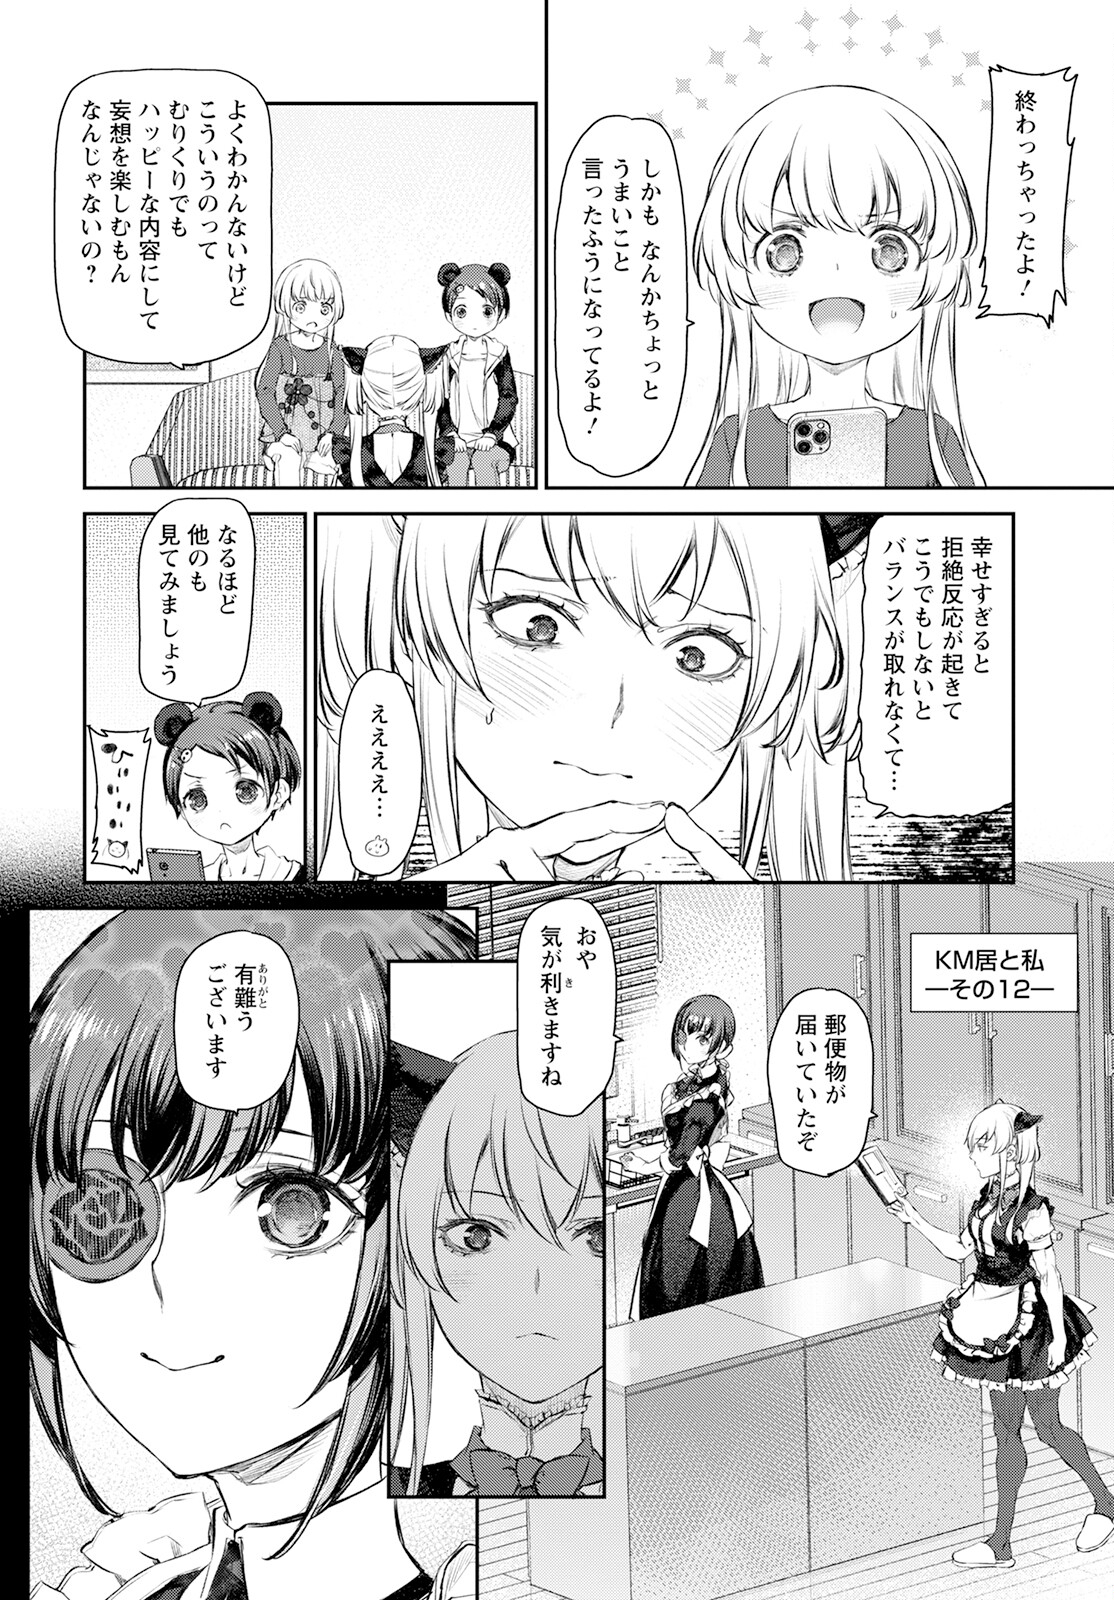 Uchi no Maid ga Uzasugiru! - Chapter 56 - Page 12